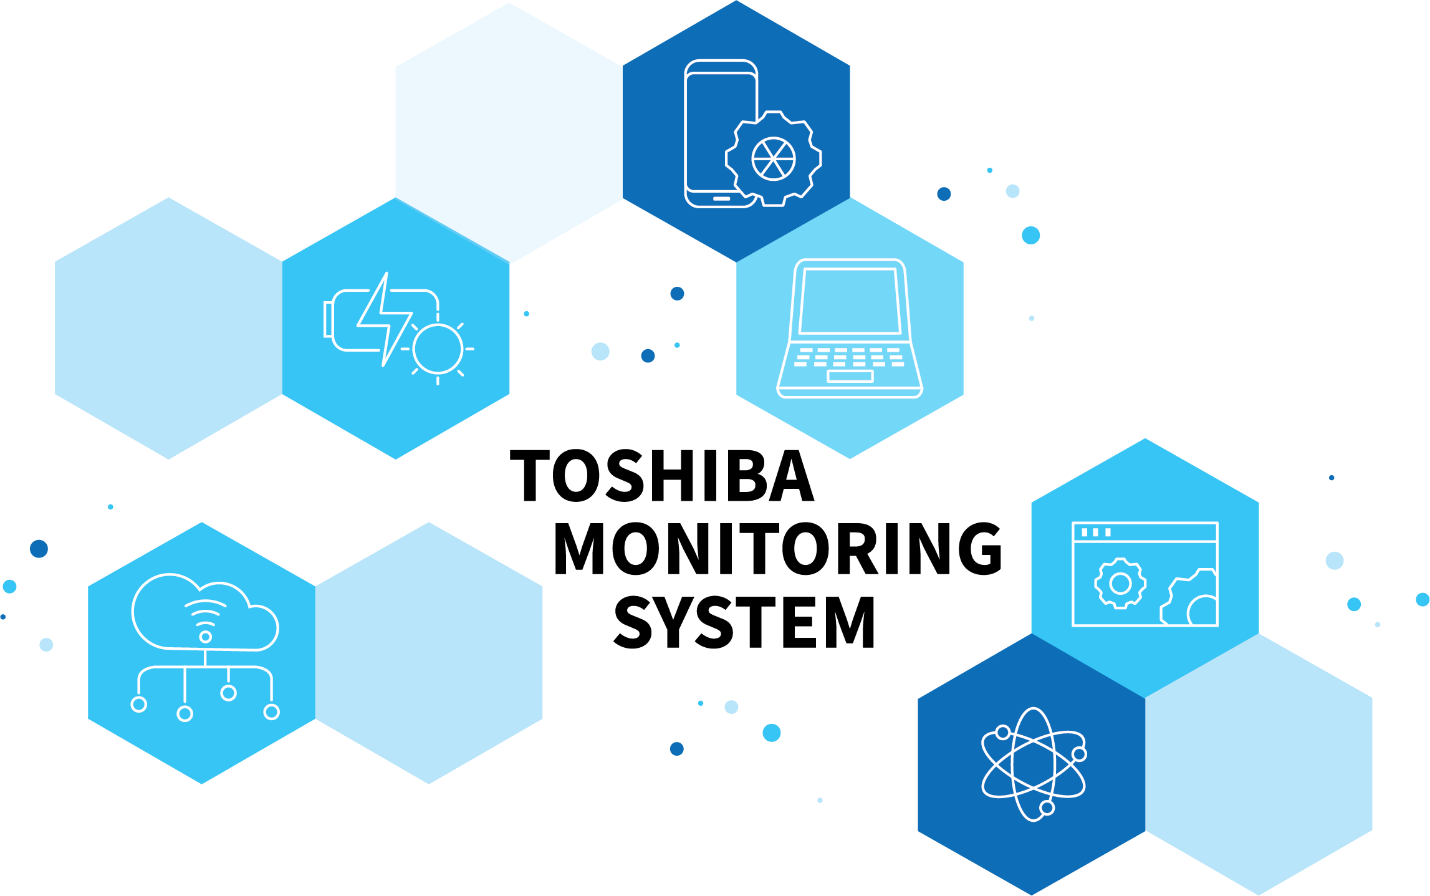 Toshiba Monitoring System